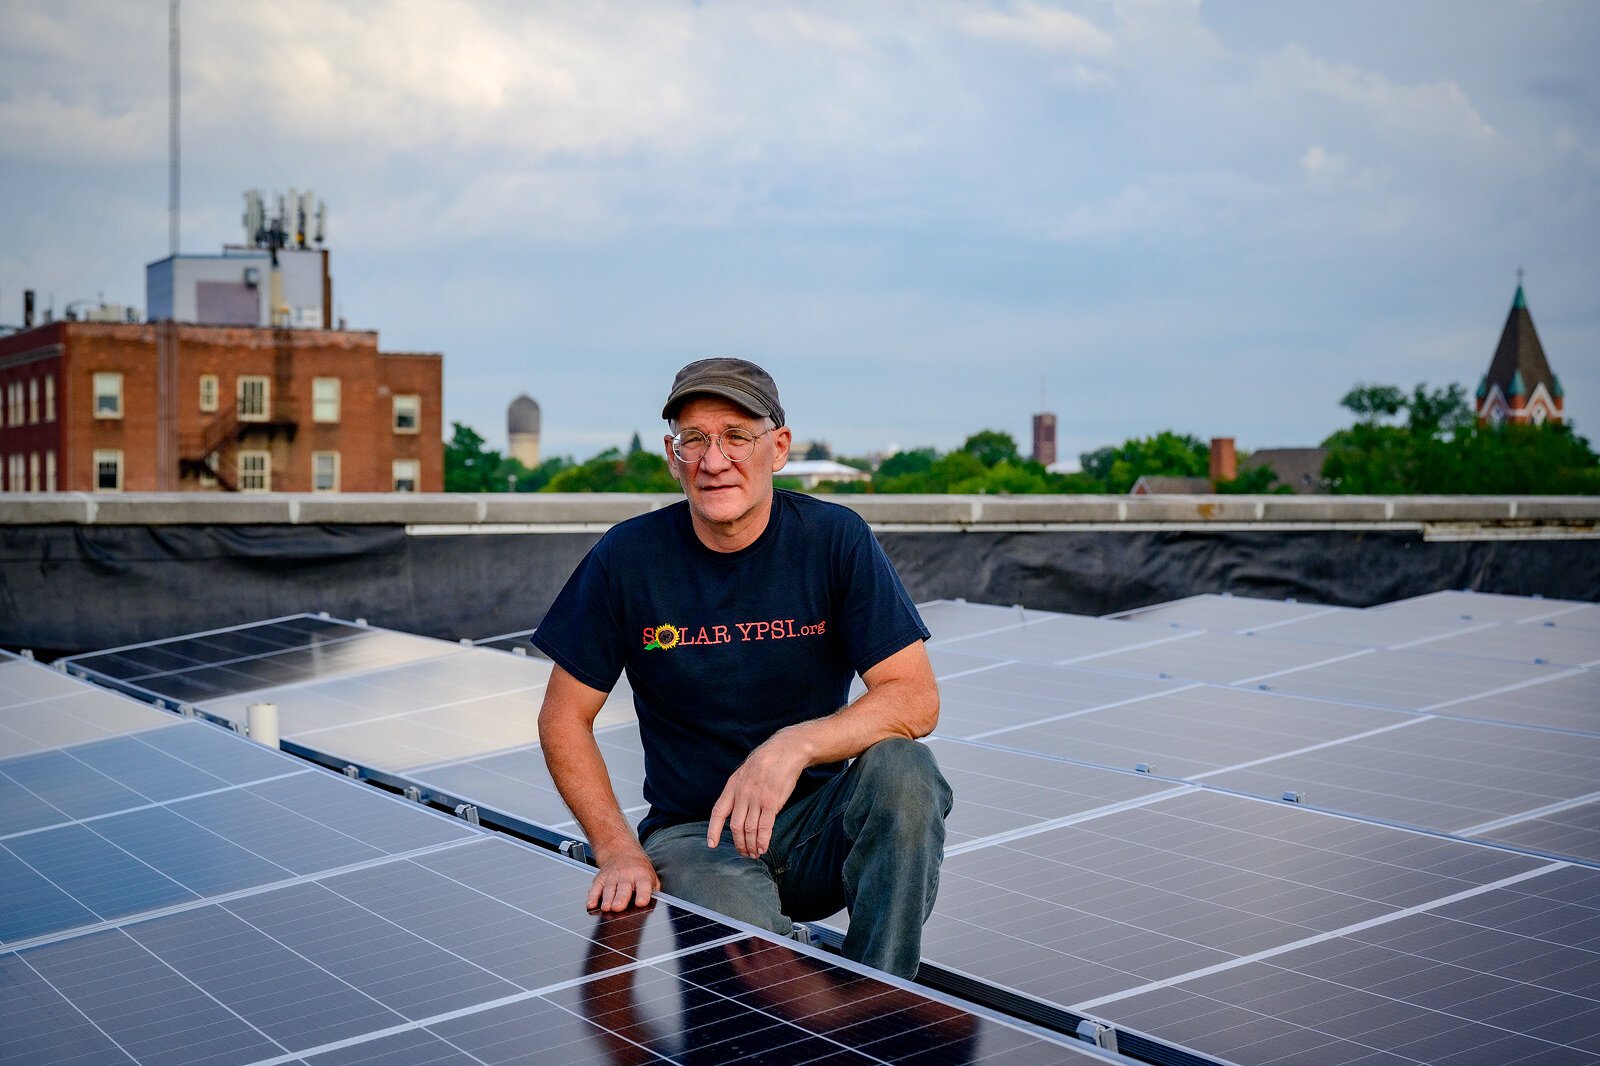 Dave Strenski among the solar panels on the roof of Riverside Arts Center.